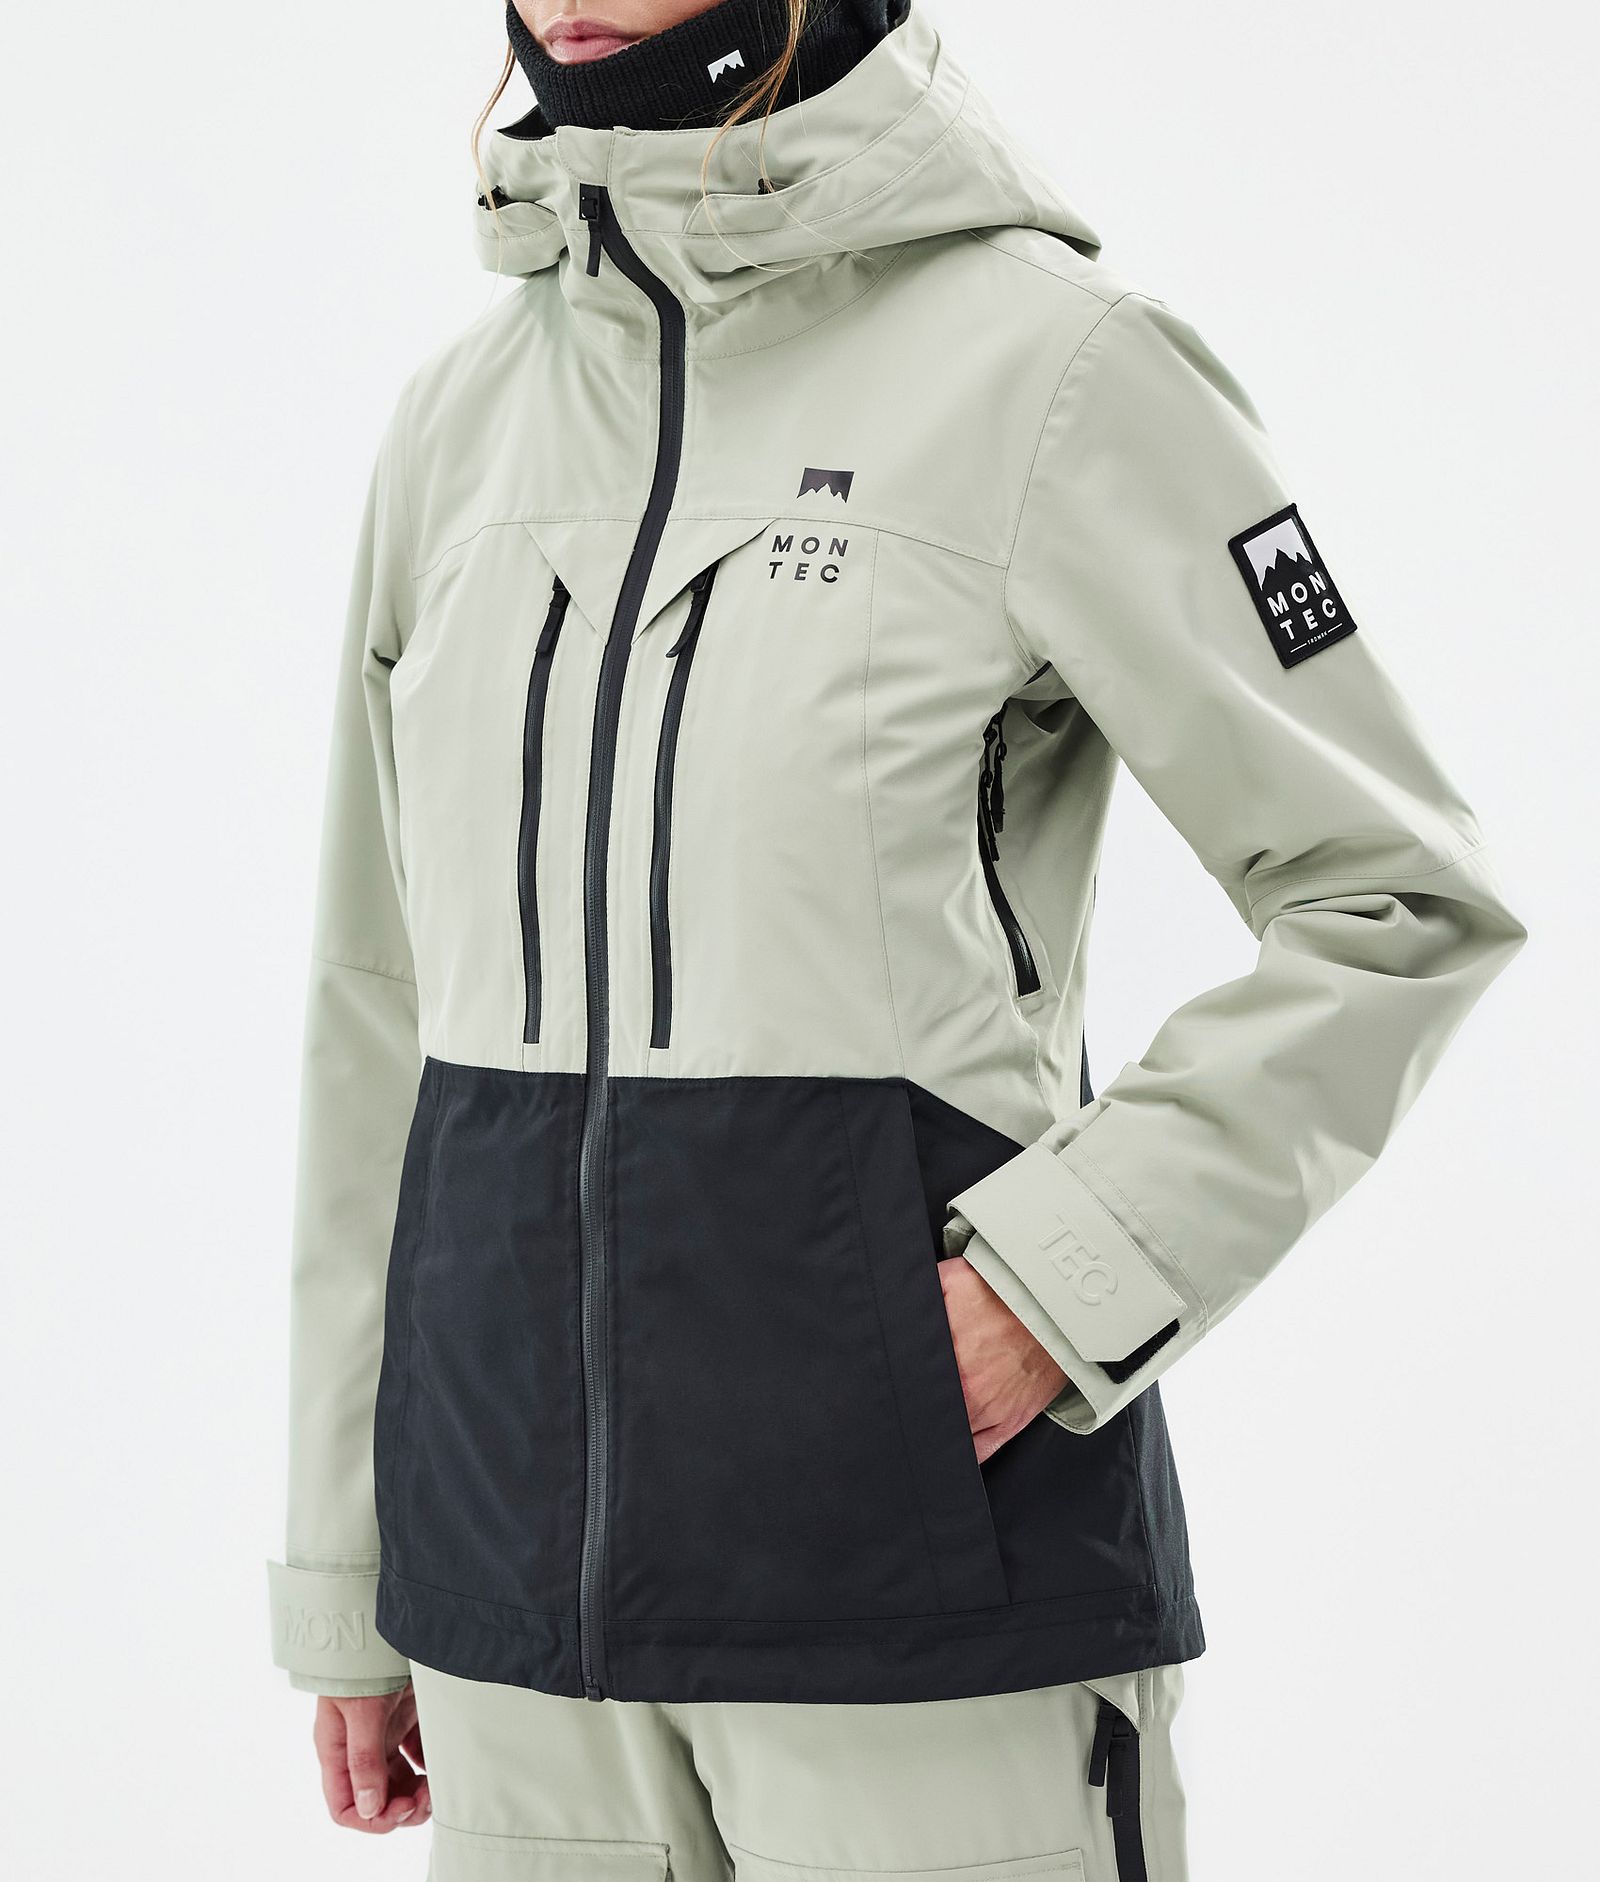 Moss W Snowboard Jacket Women Soft Green/Black Renewed, Image 8 of 10